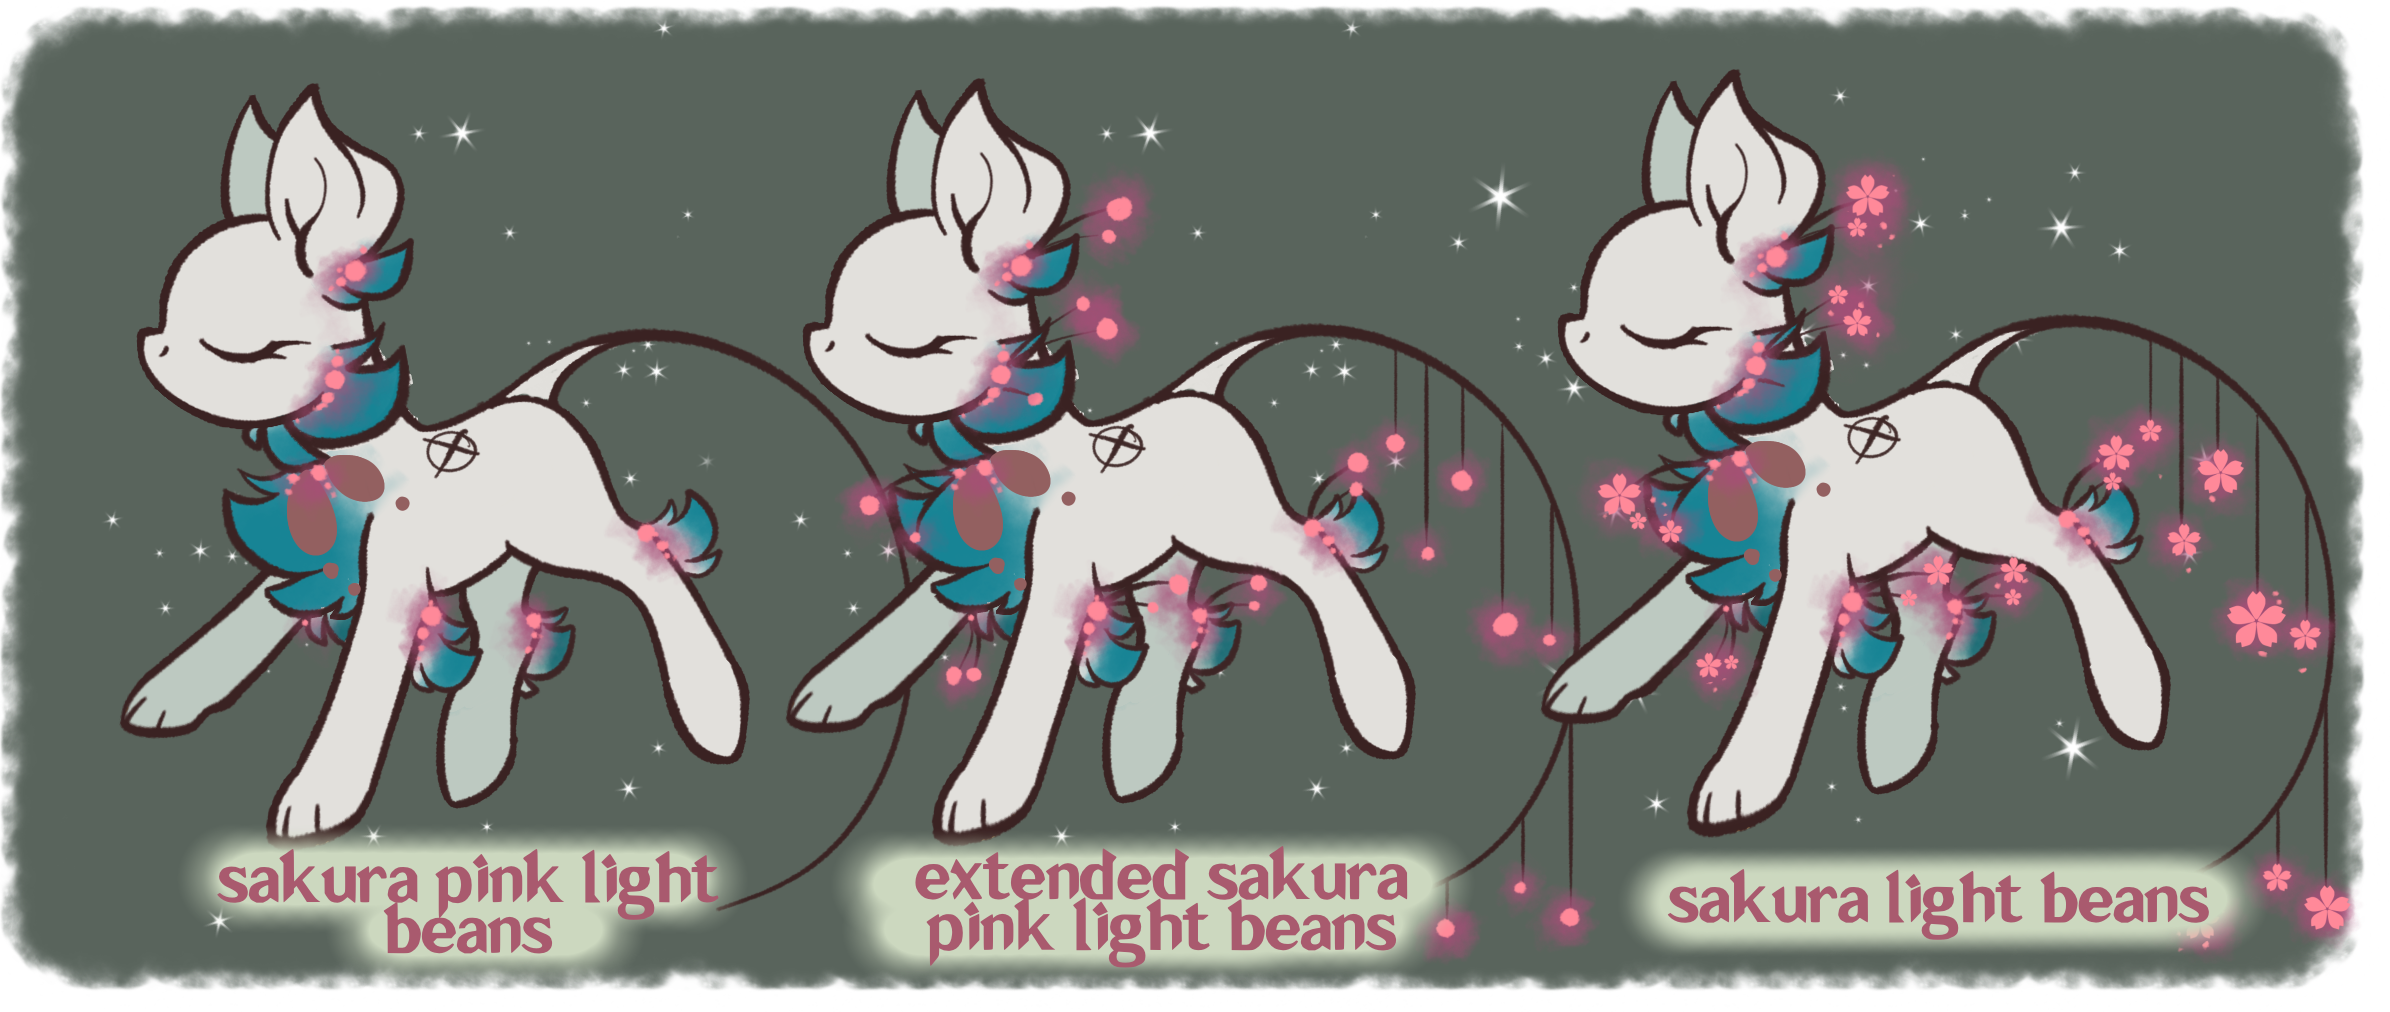 Sakura Pink Light Beans Alternate Types